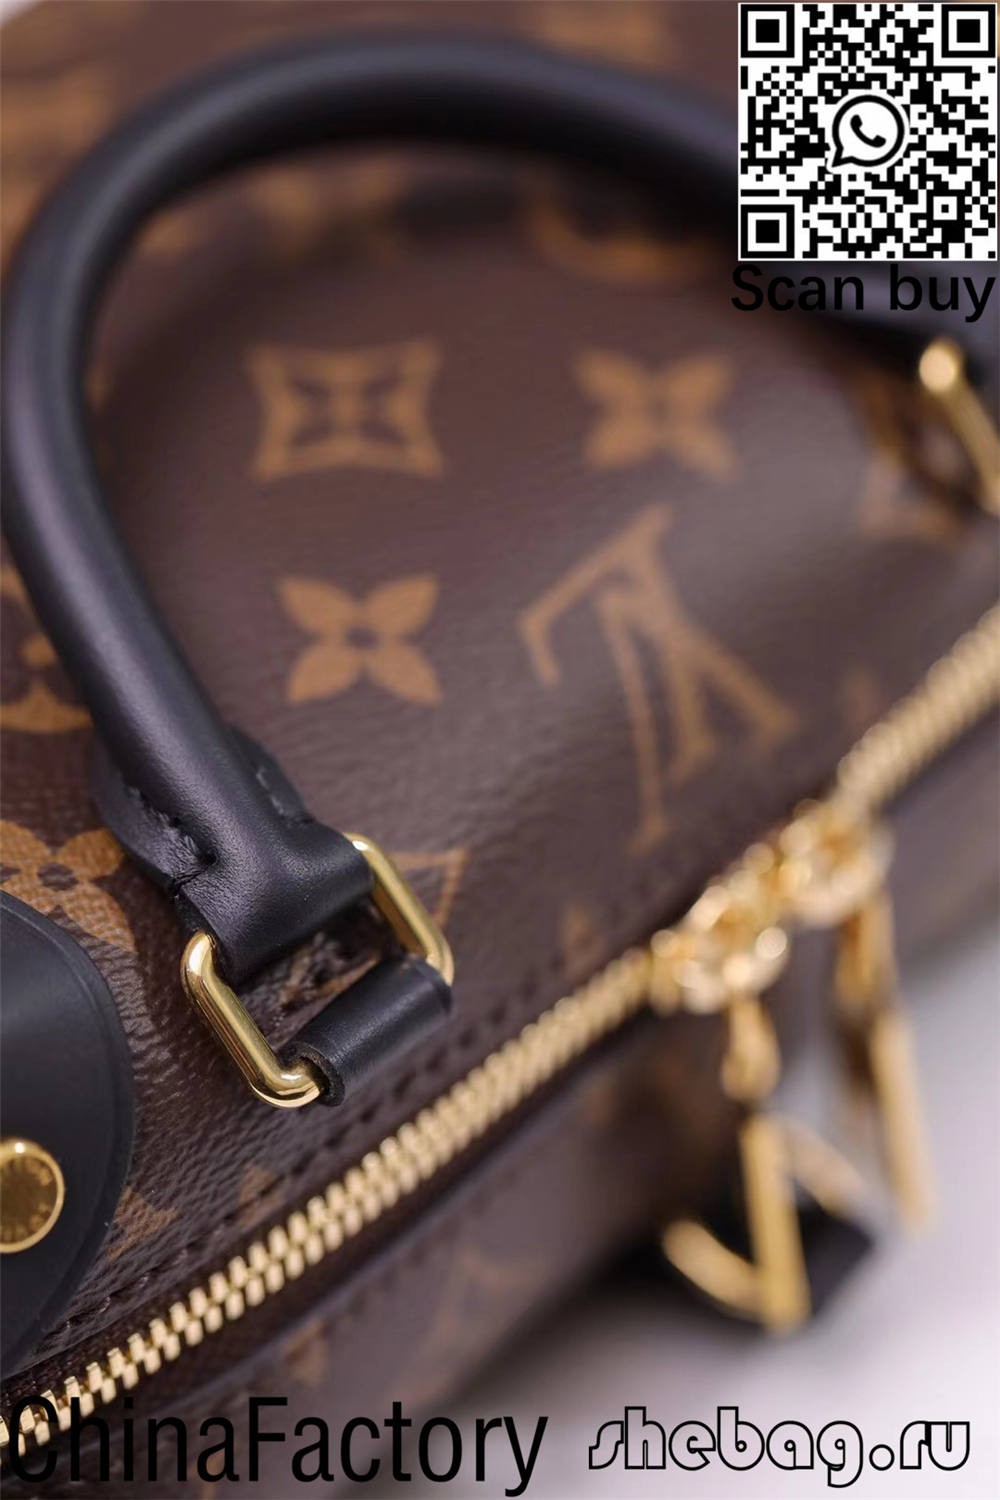 louis vitton bags replicas uk buy suggestions (2022 newest)-Best Quality Fake Louis Vuitton Bag Online Store, Replica designer bag ru